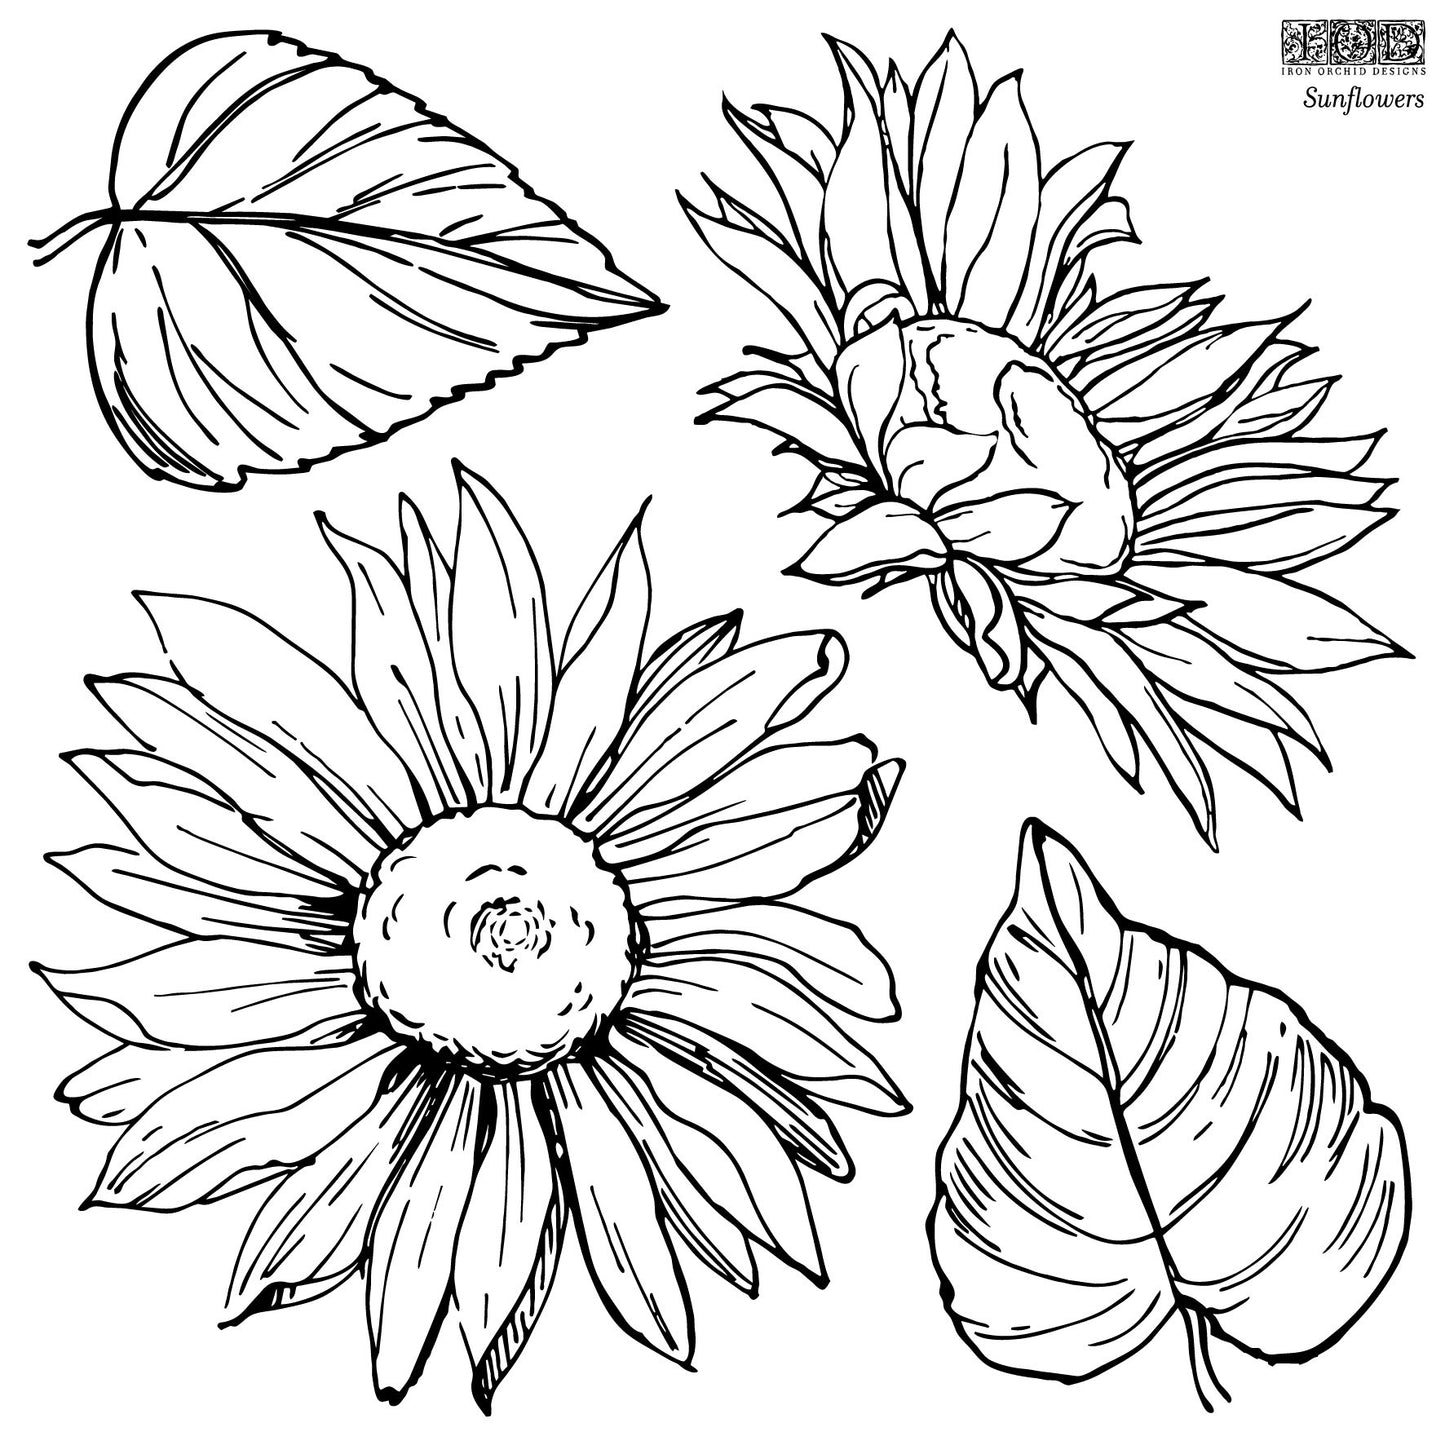 Sunflowers - 12x12 Decor Stamp™